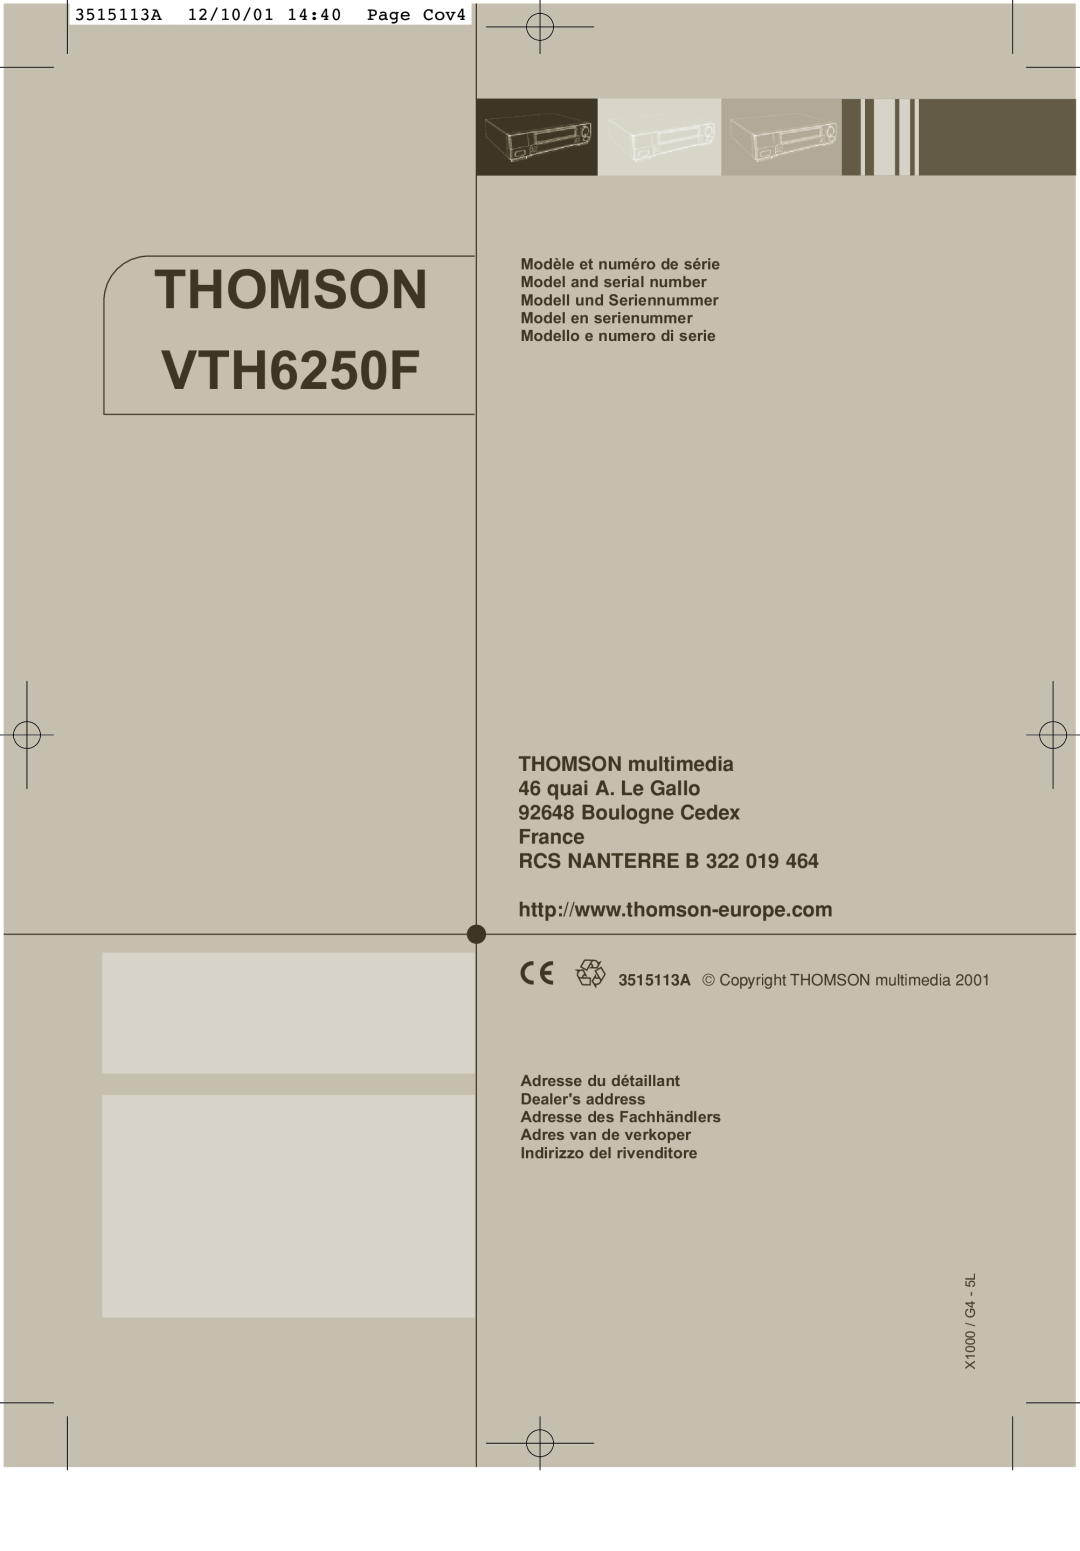 Technicolor - Thomson VTH6250F manuel dutilisation 3515113A 12/10/01 1440 Page Cov4, Thomson, RCS NANTERRE B 322 019 